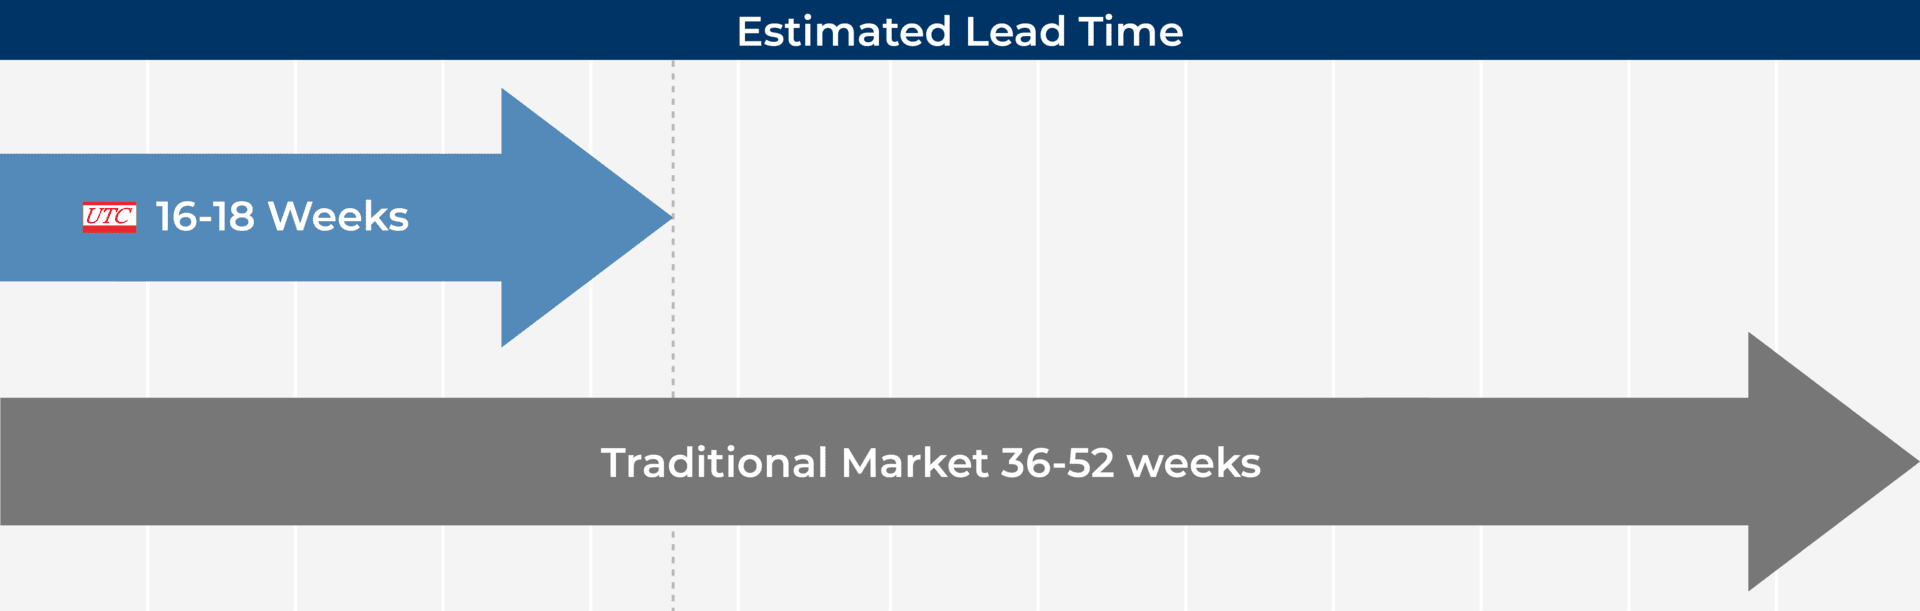 estimated-lead-time